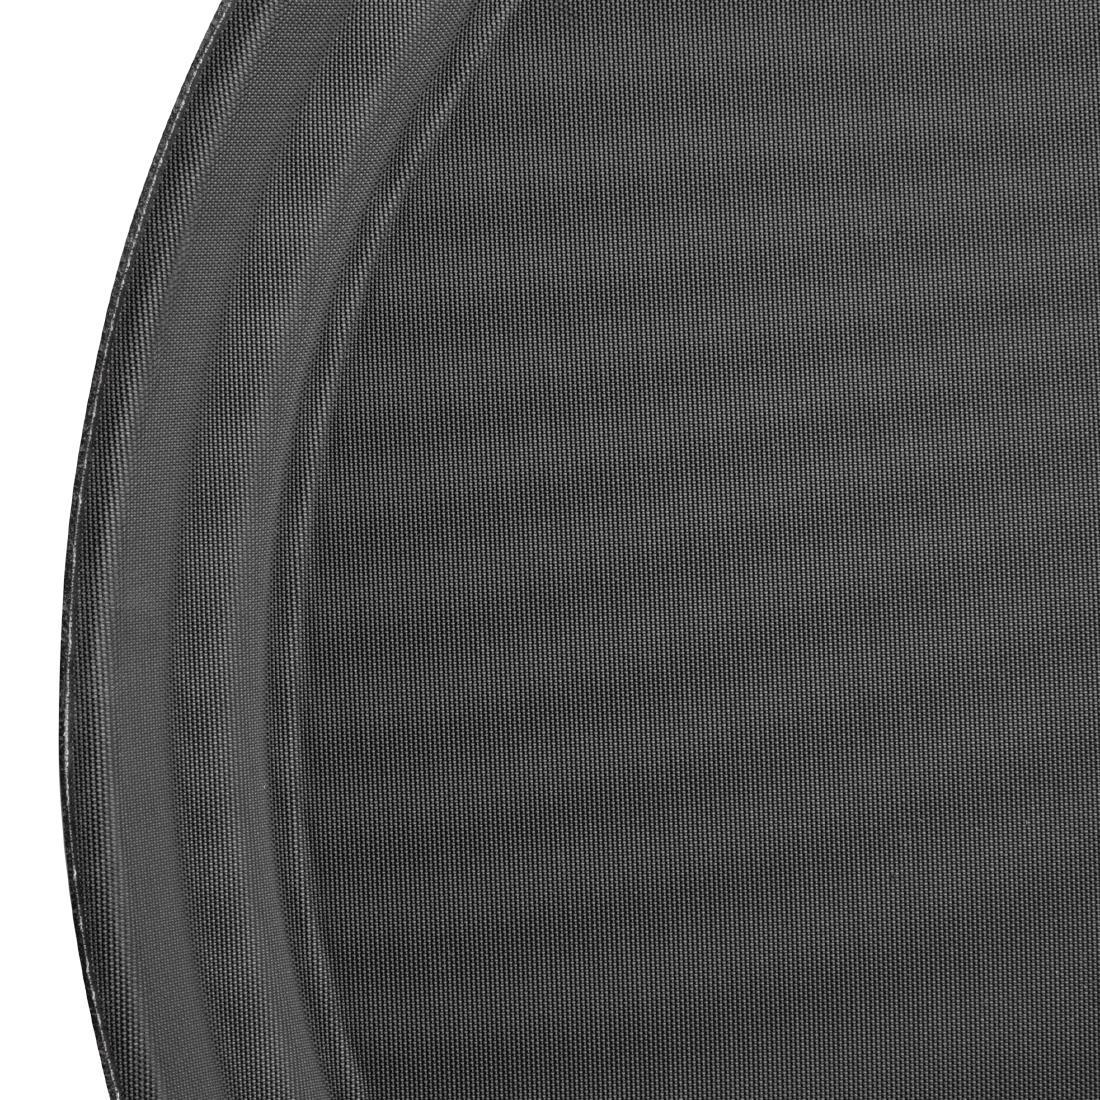 Olympia Kristallon Fibreglass Round Non-Slip Tray Black 406mm - J847  - 3